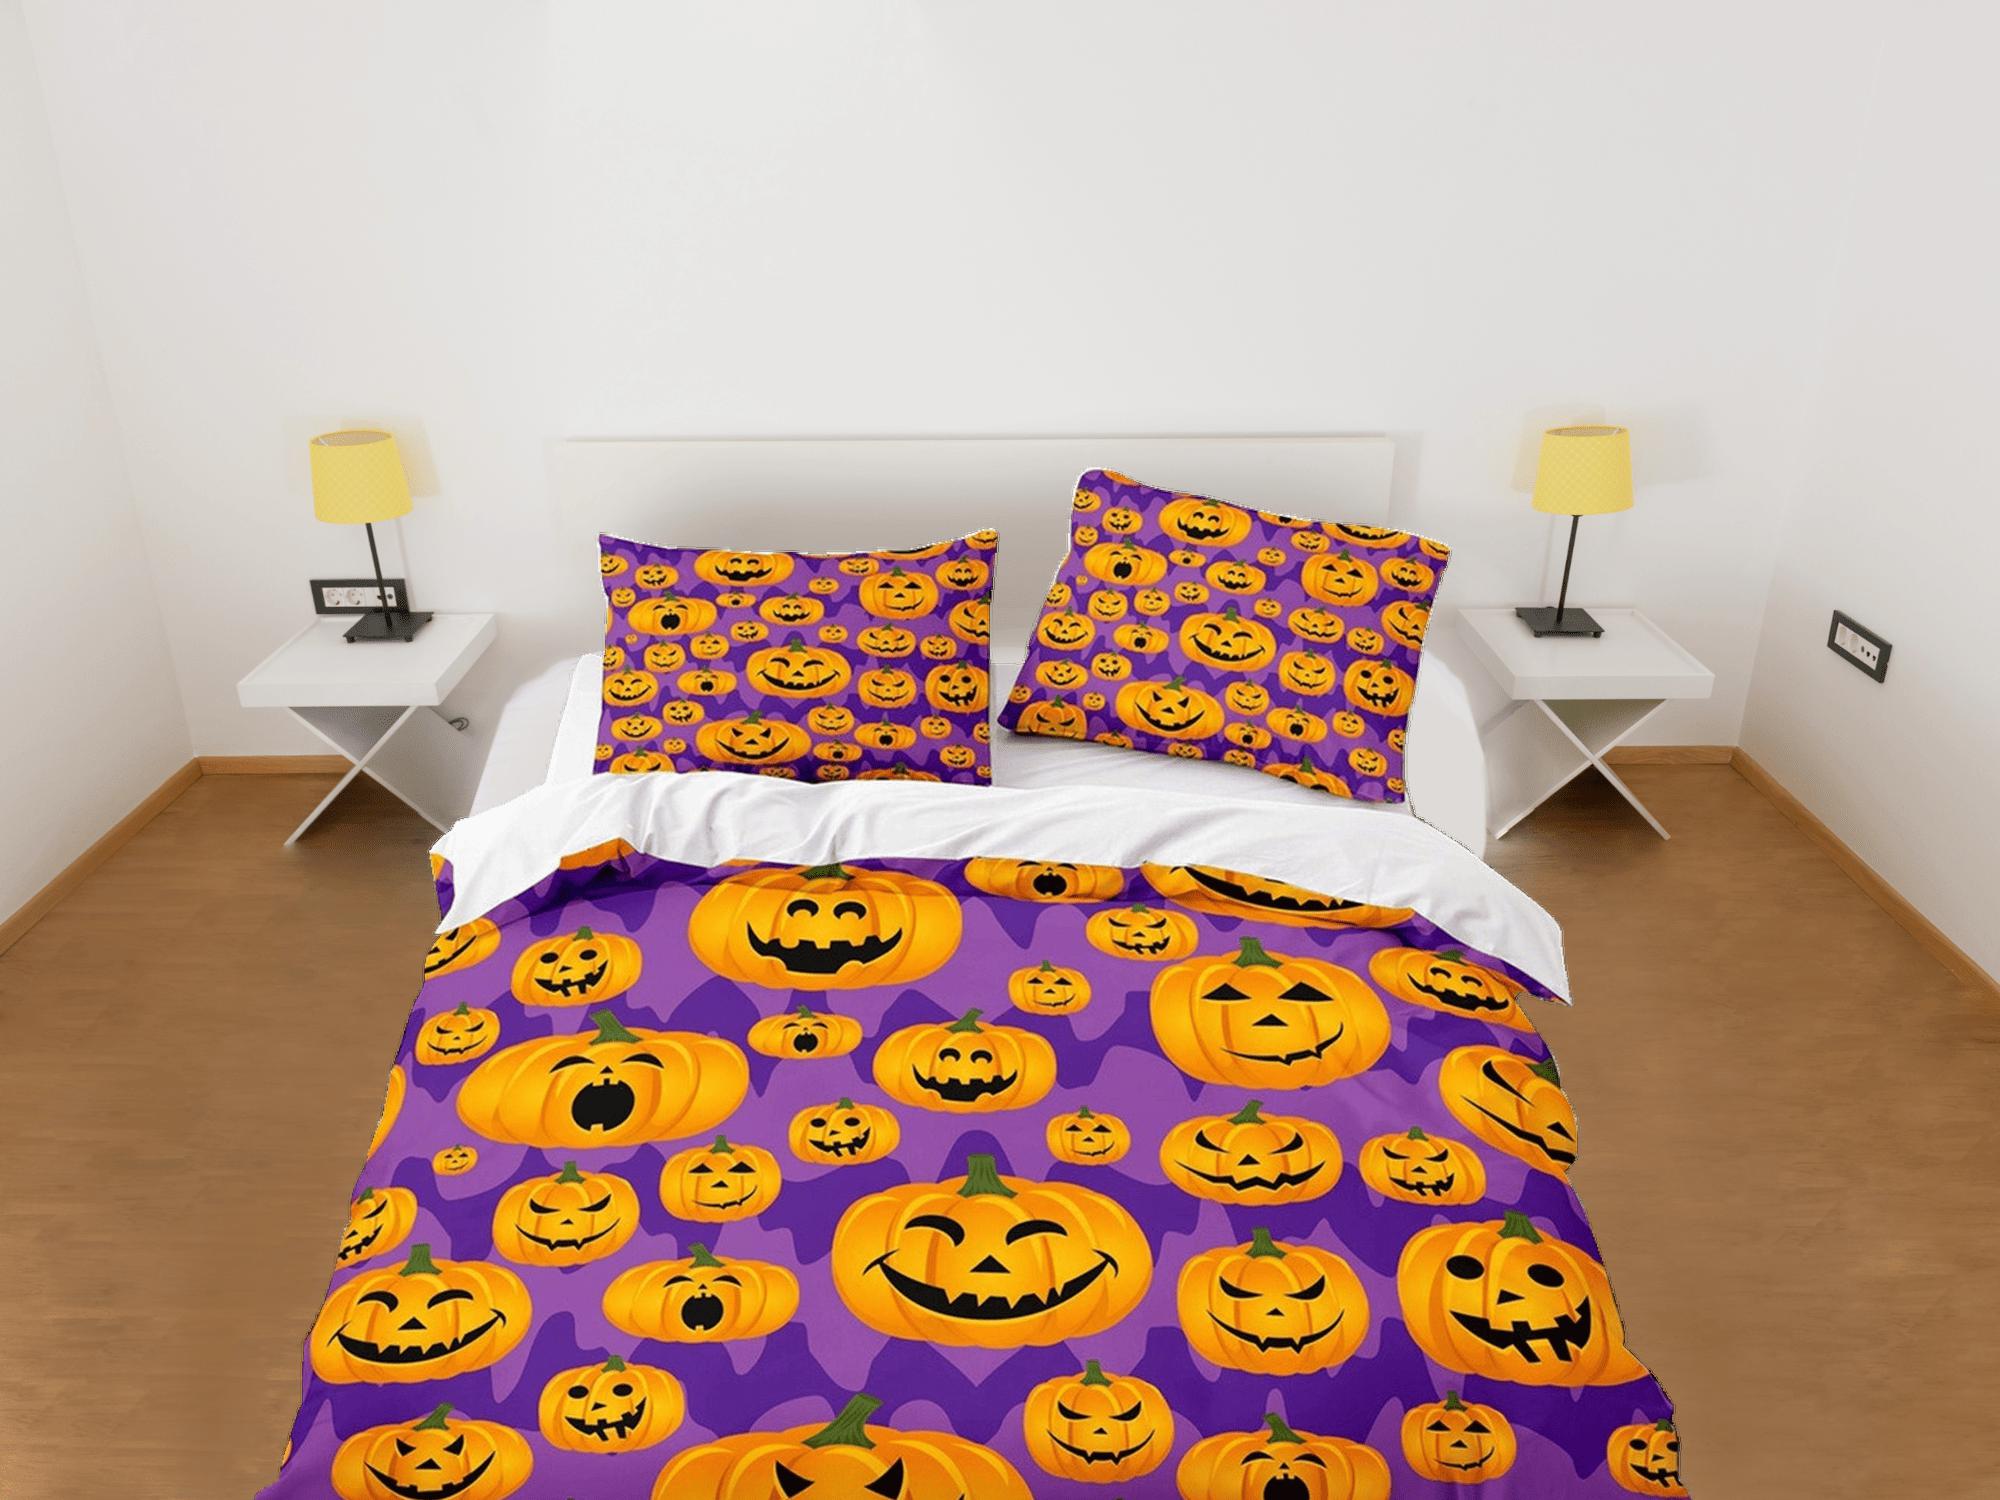 daintyduvet Happy pumpkin halloween full size bedding & pillowcase, purple duvet cover set dorm bedding, nursery toddler bedding, halloween gift